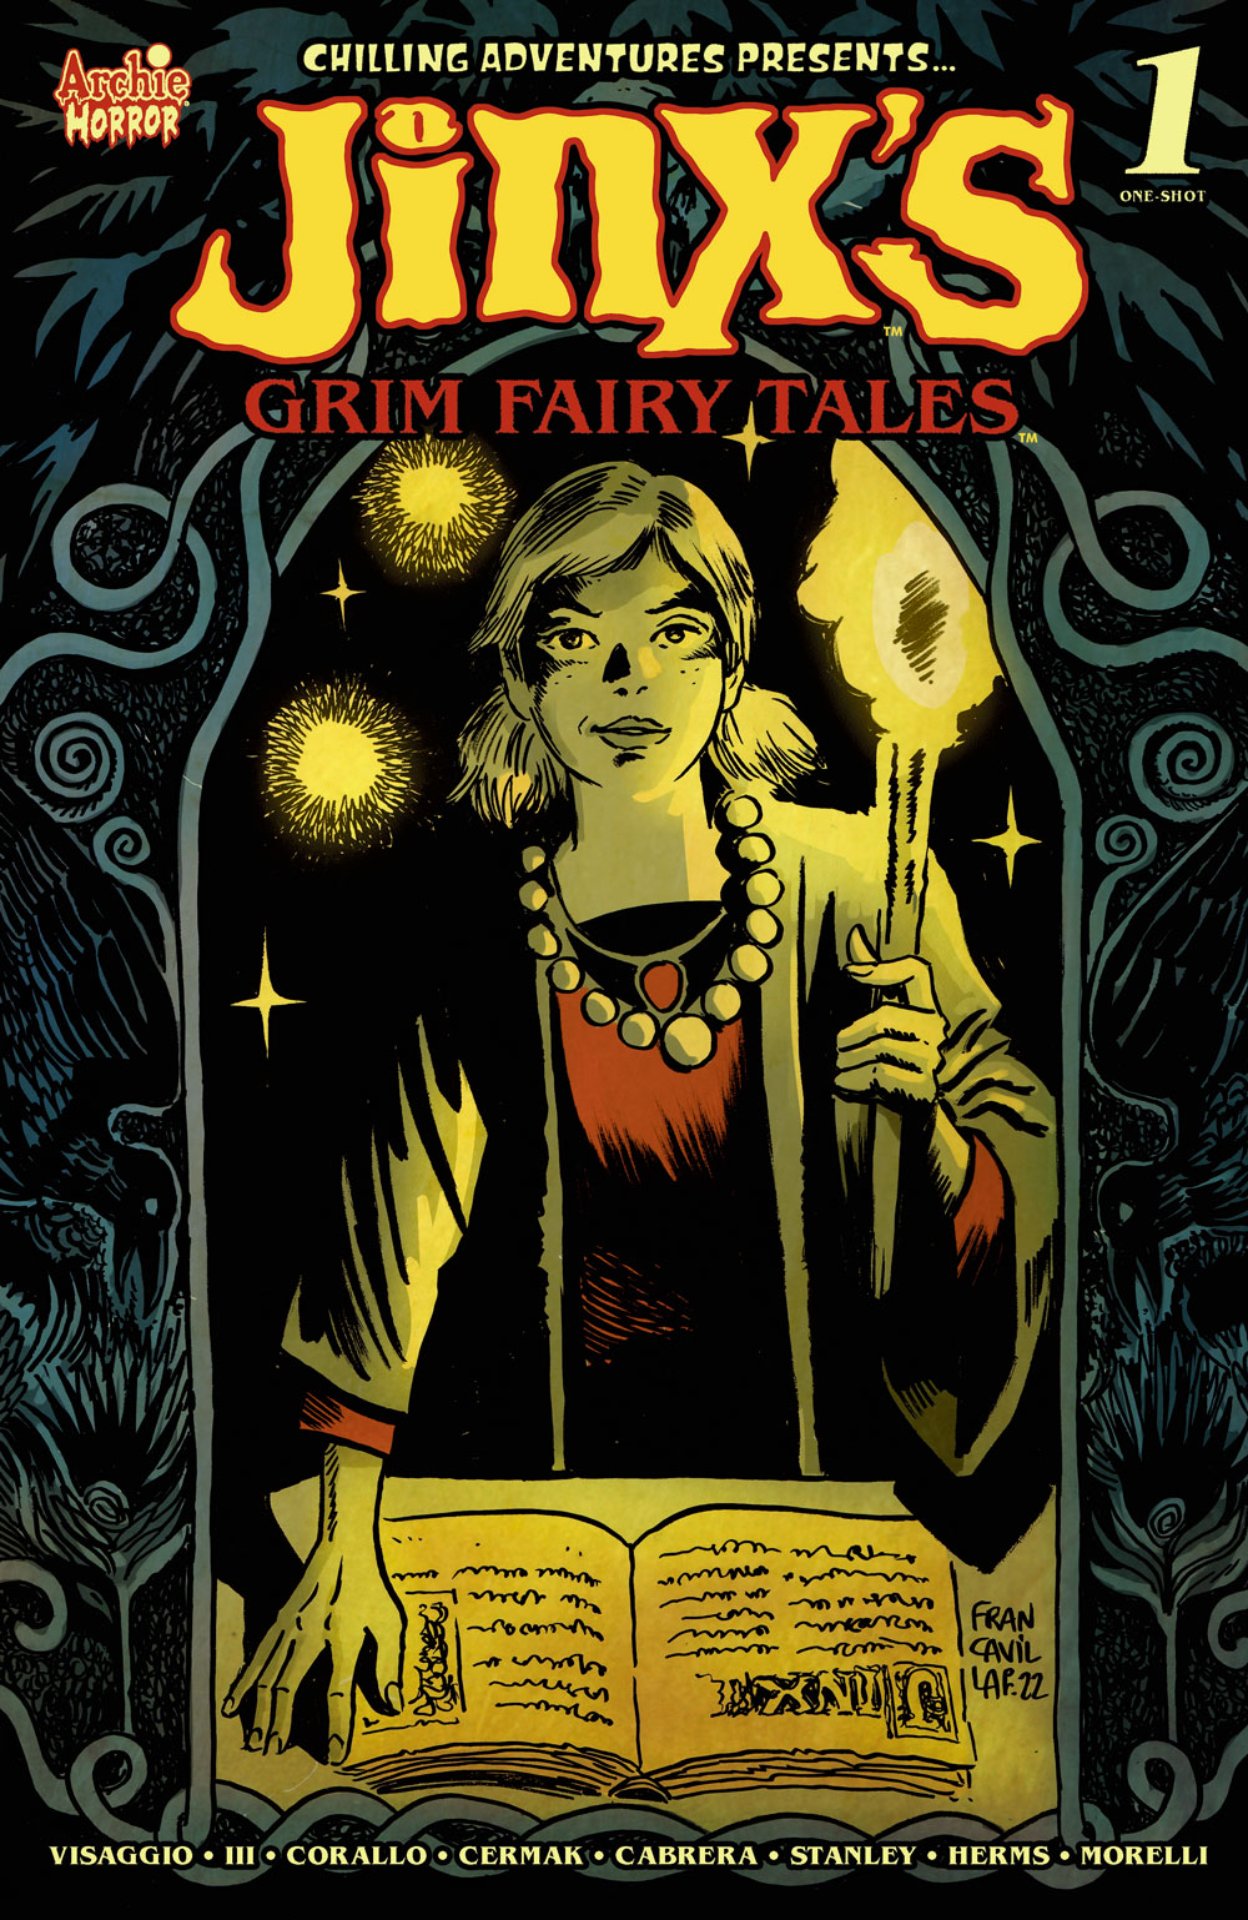 Chilling Adventures Presents... Jinx's Grim Fairy Tales #1